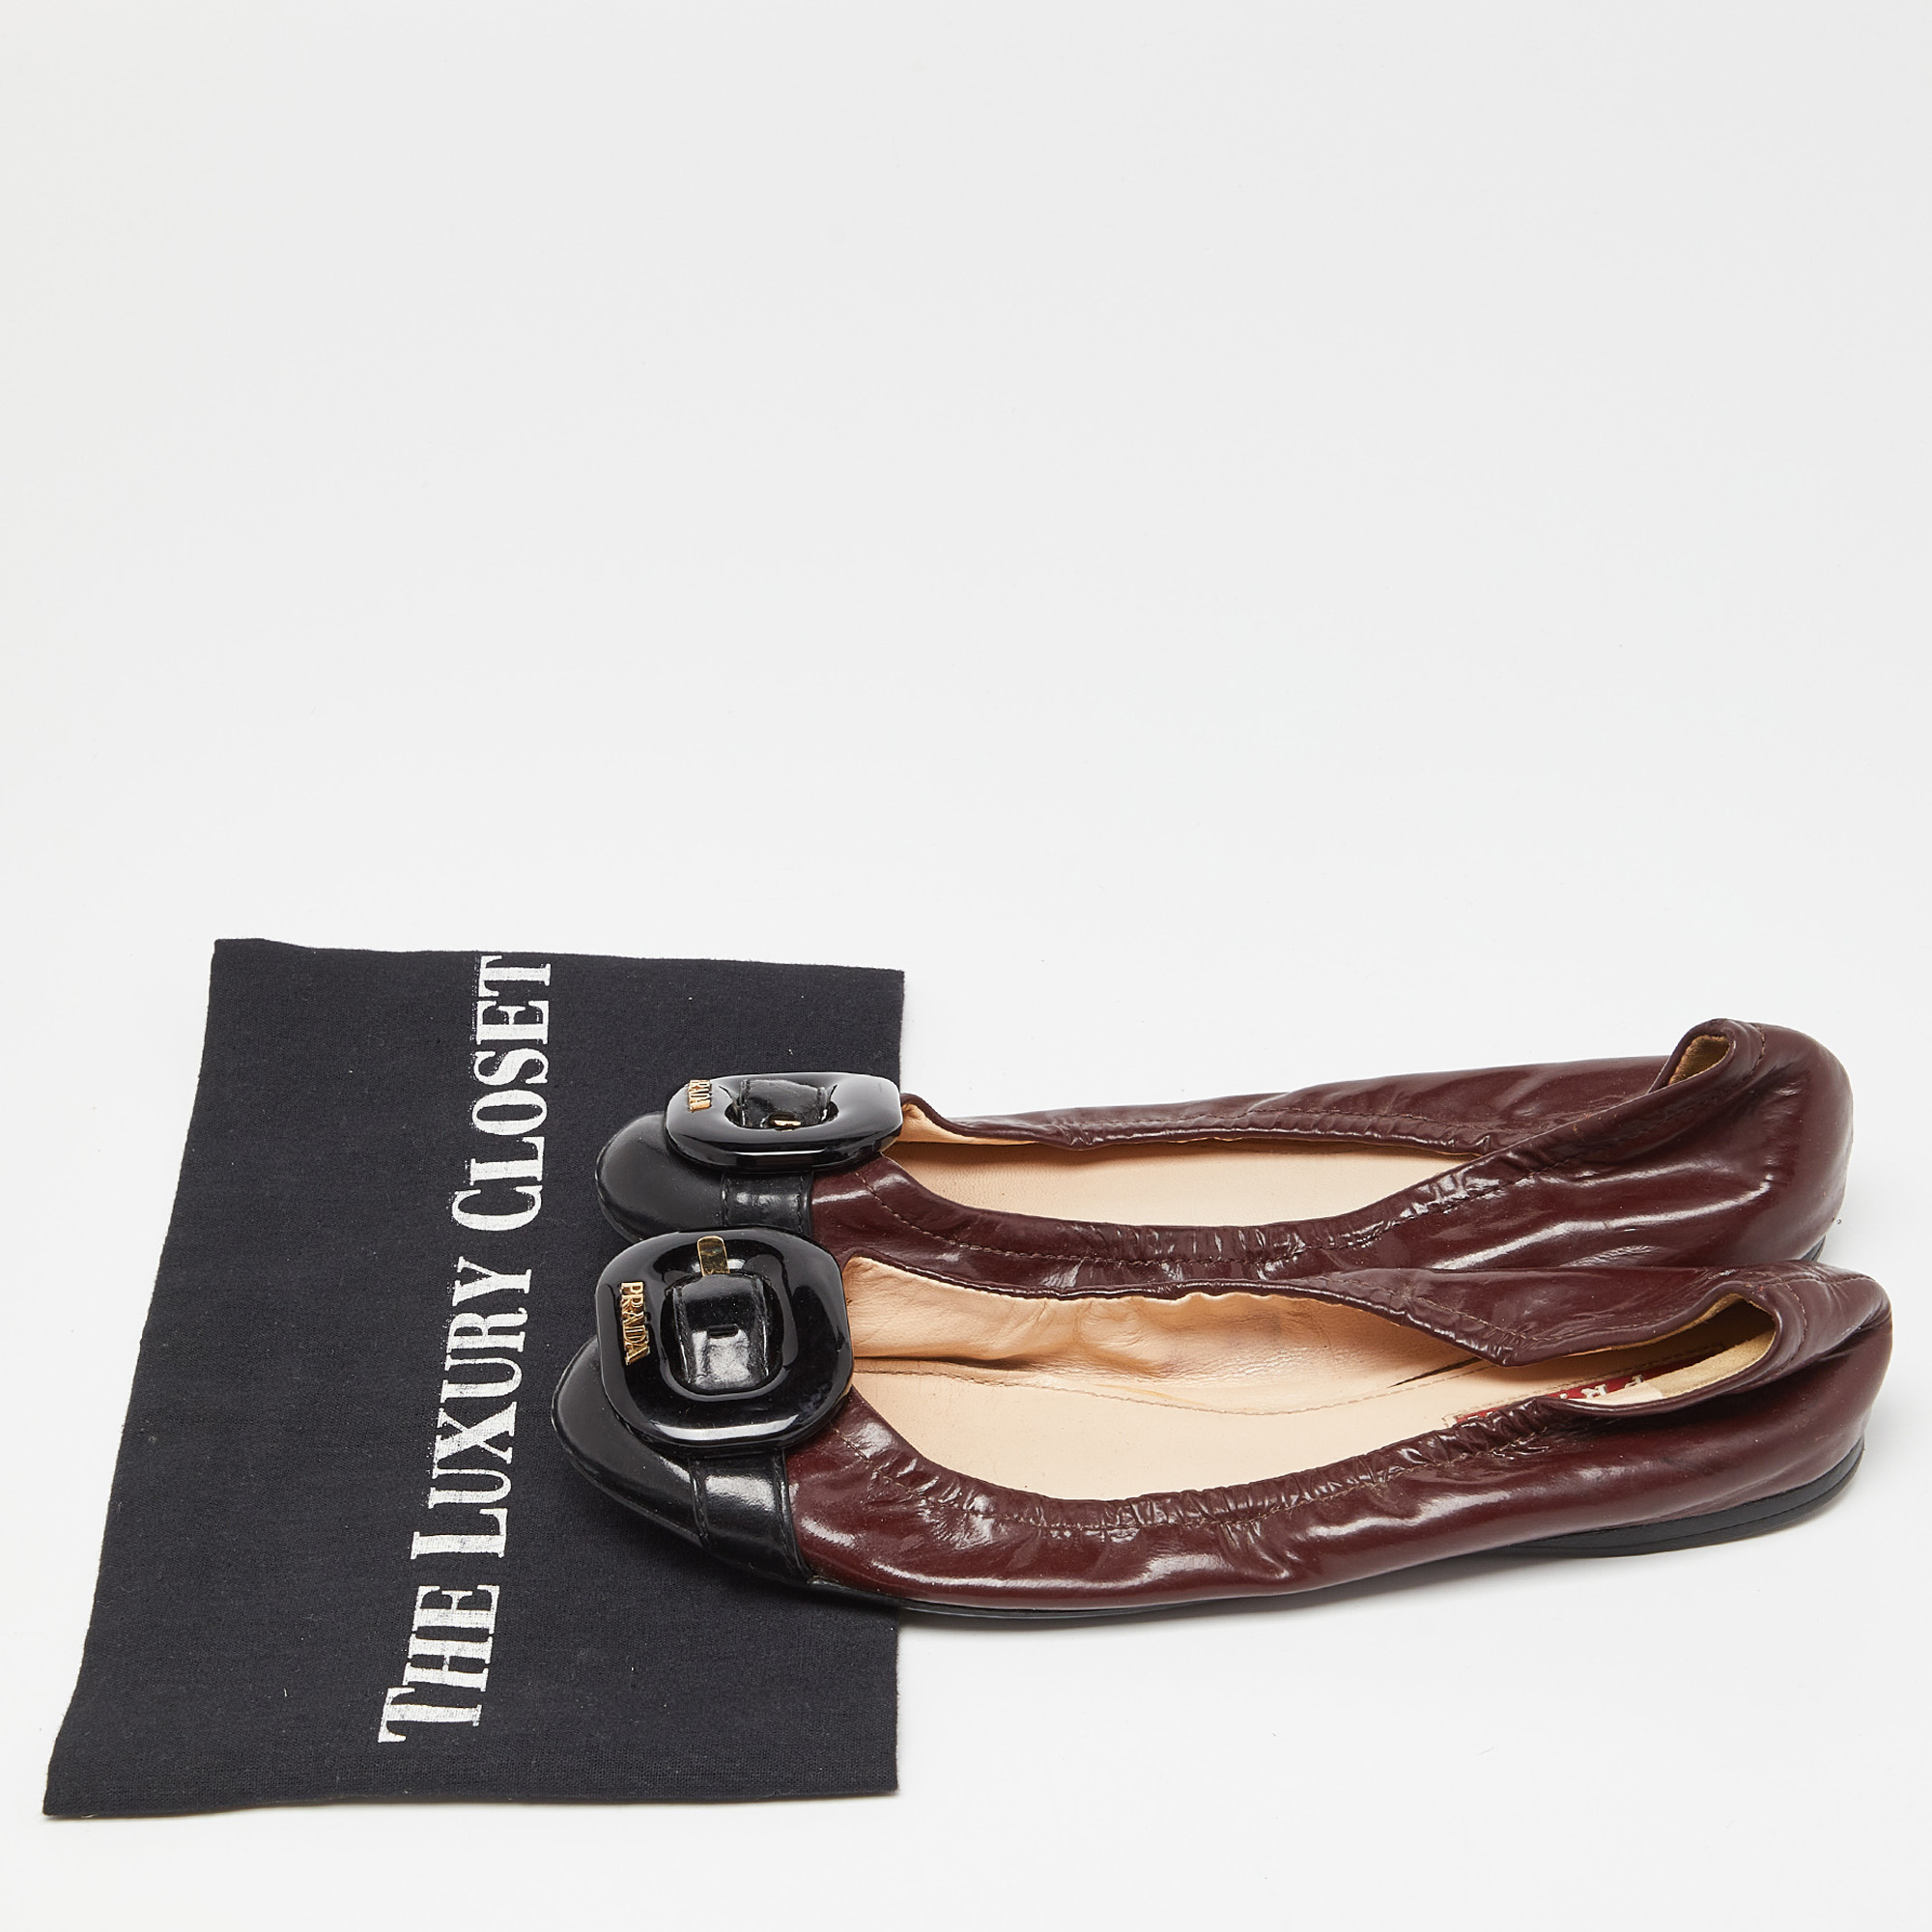 Prada Sport Brown/Black Patent Leather Ballet Flats Size 38